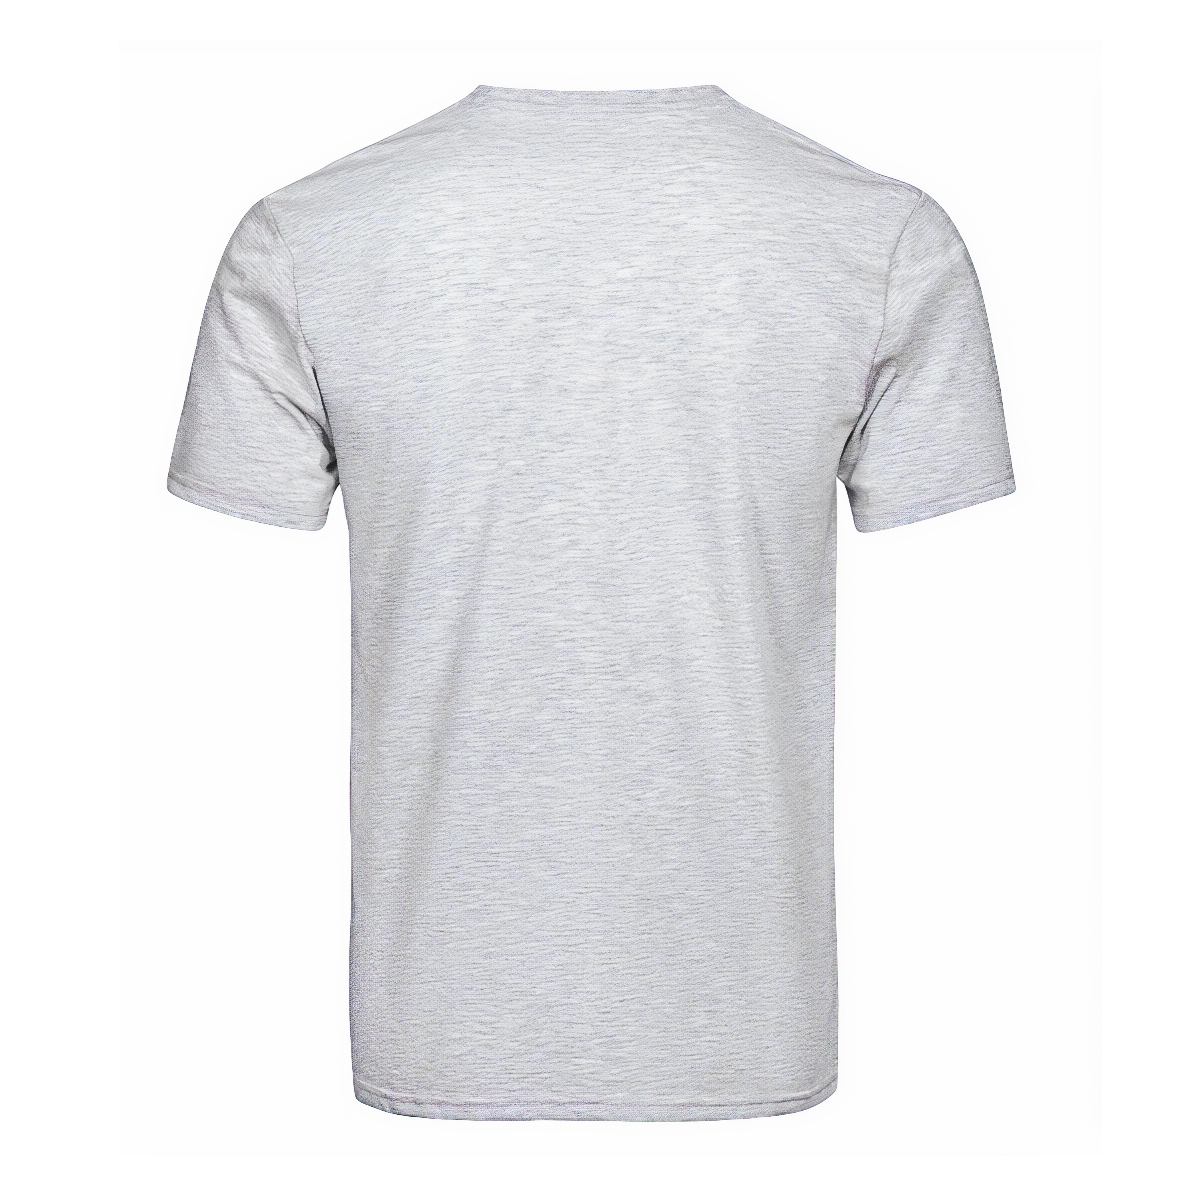 Sinclair Tartan Crest T-shirt - I'm not yelling style